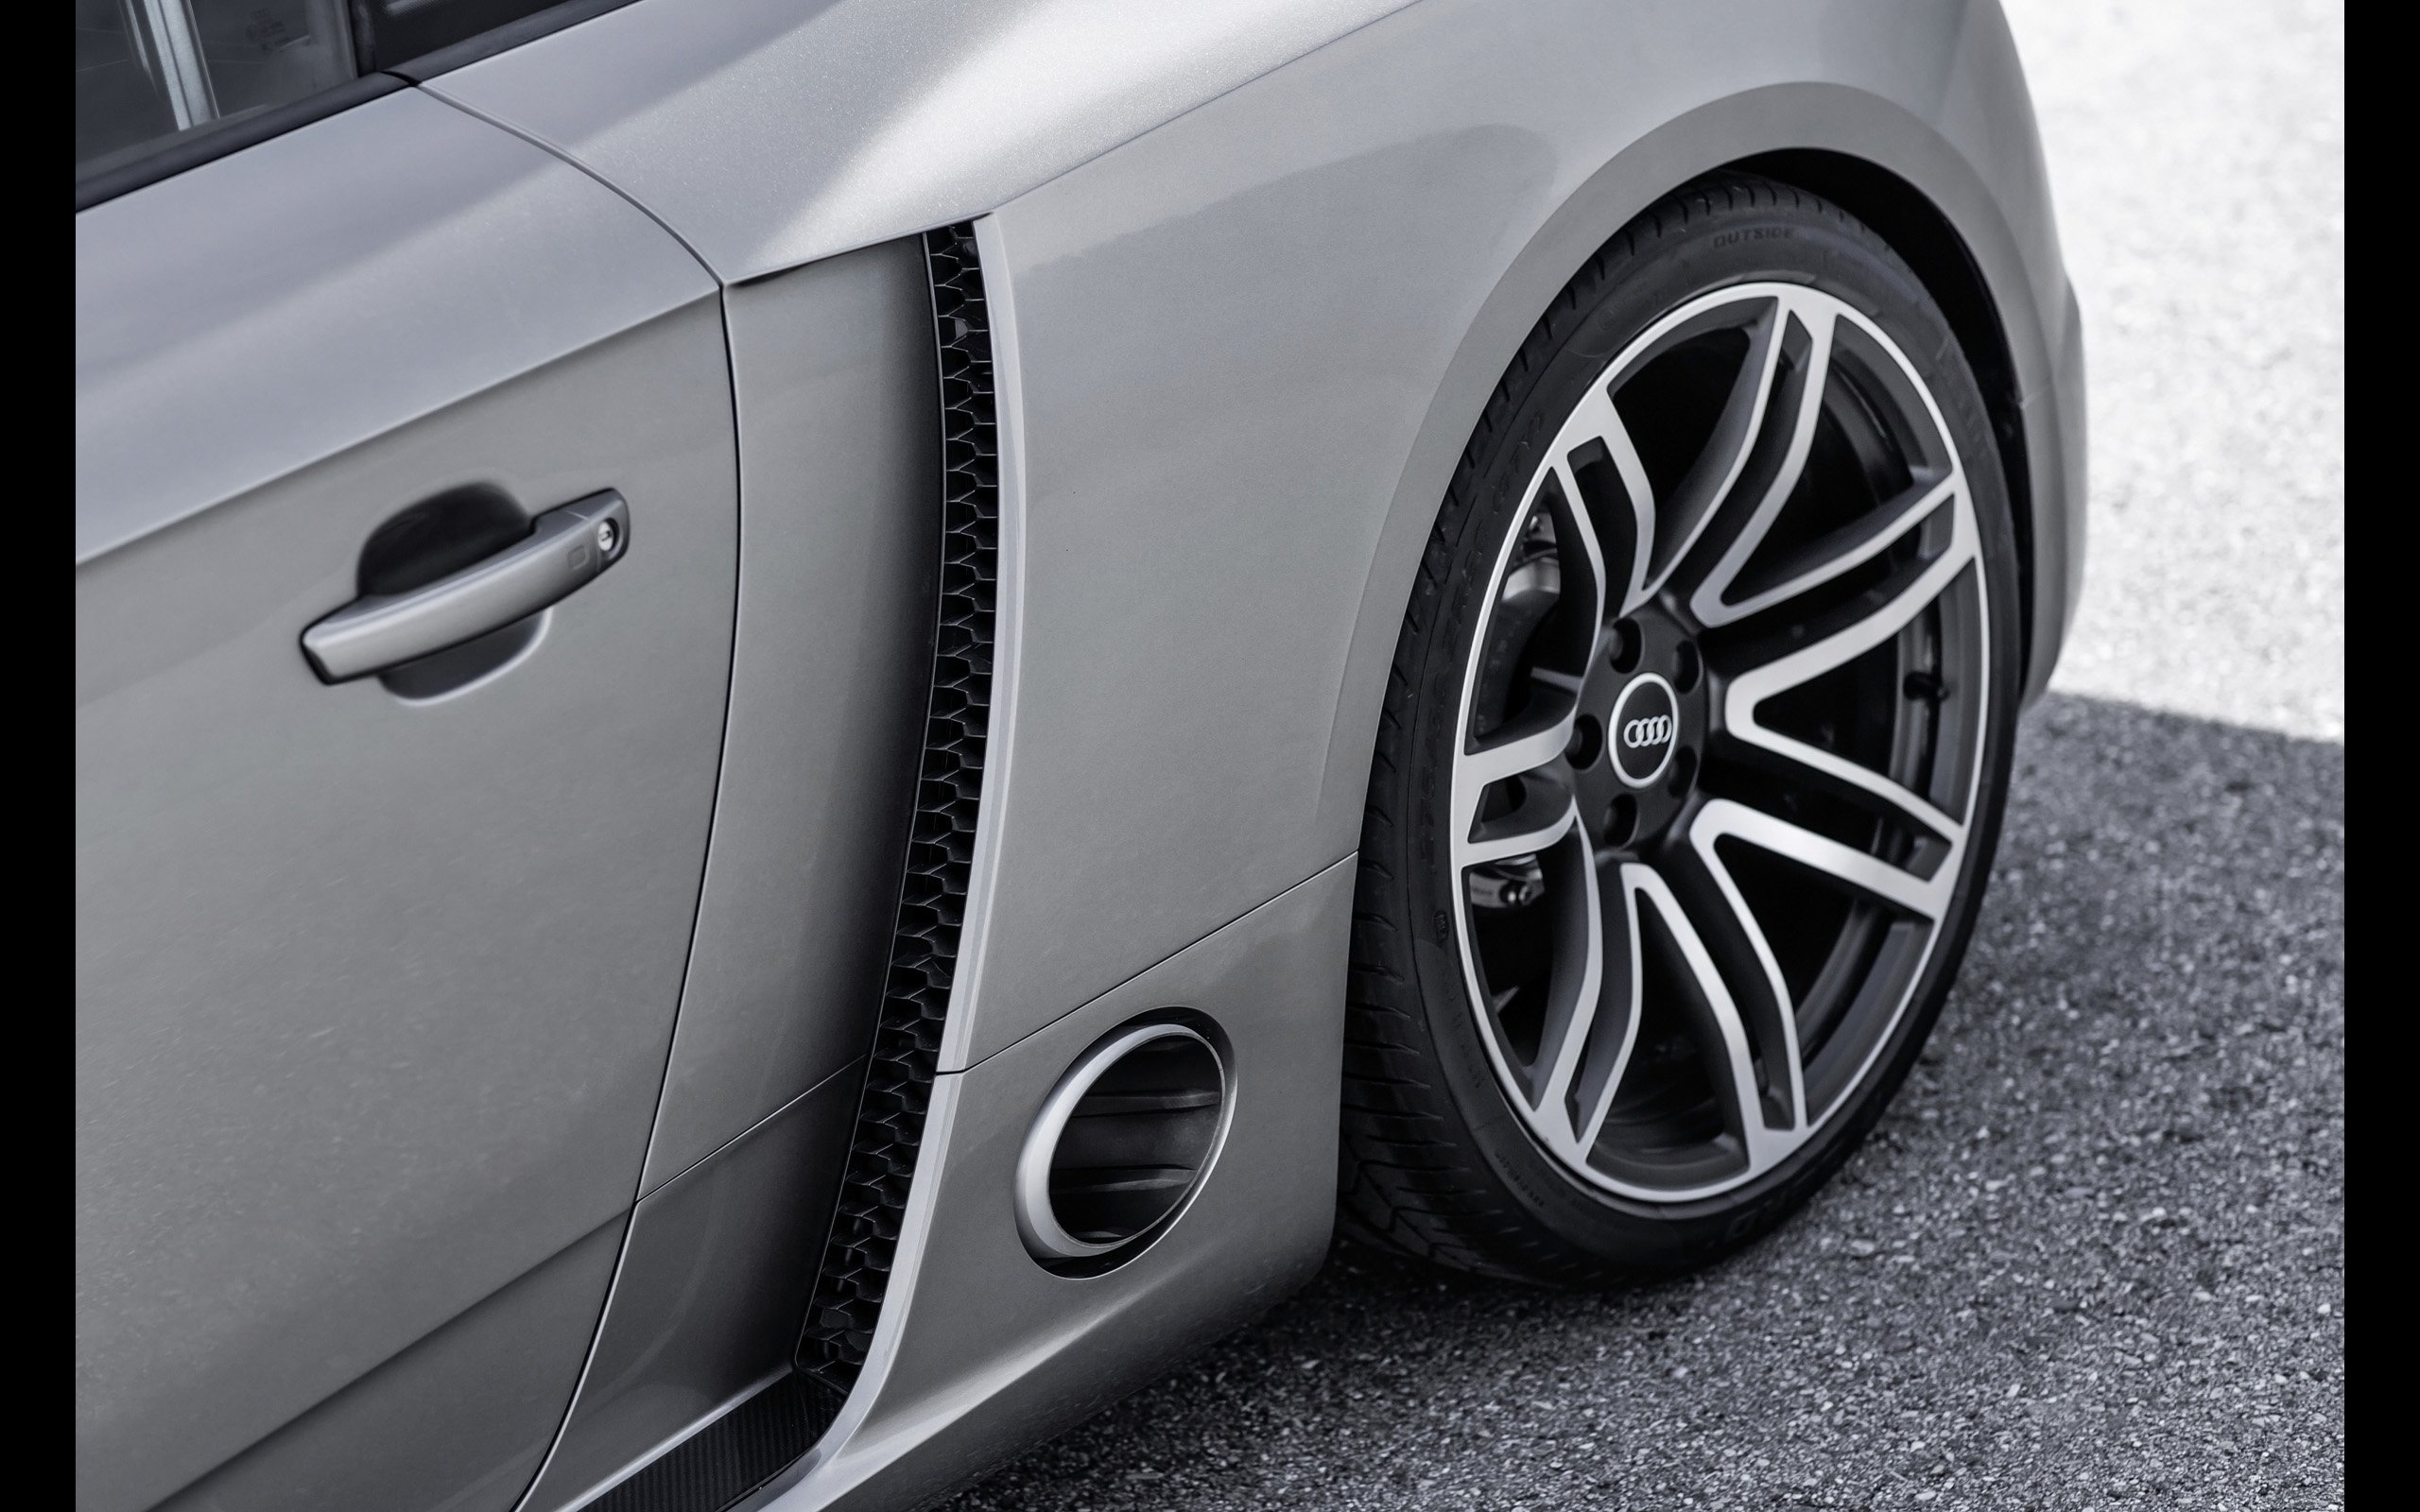 2015, Audi, T t, Clubsport, Turbo, Concept, Supercar, Tuning Wallpaper